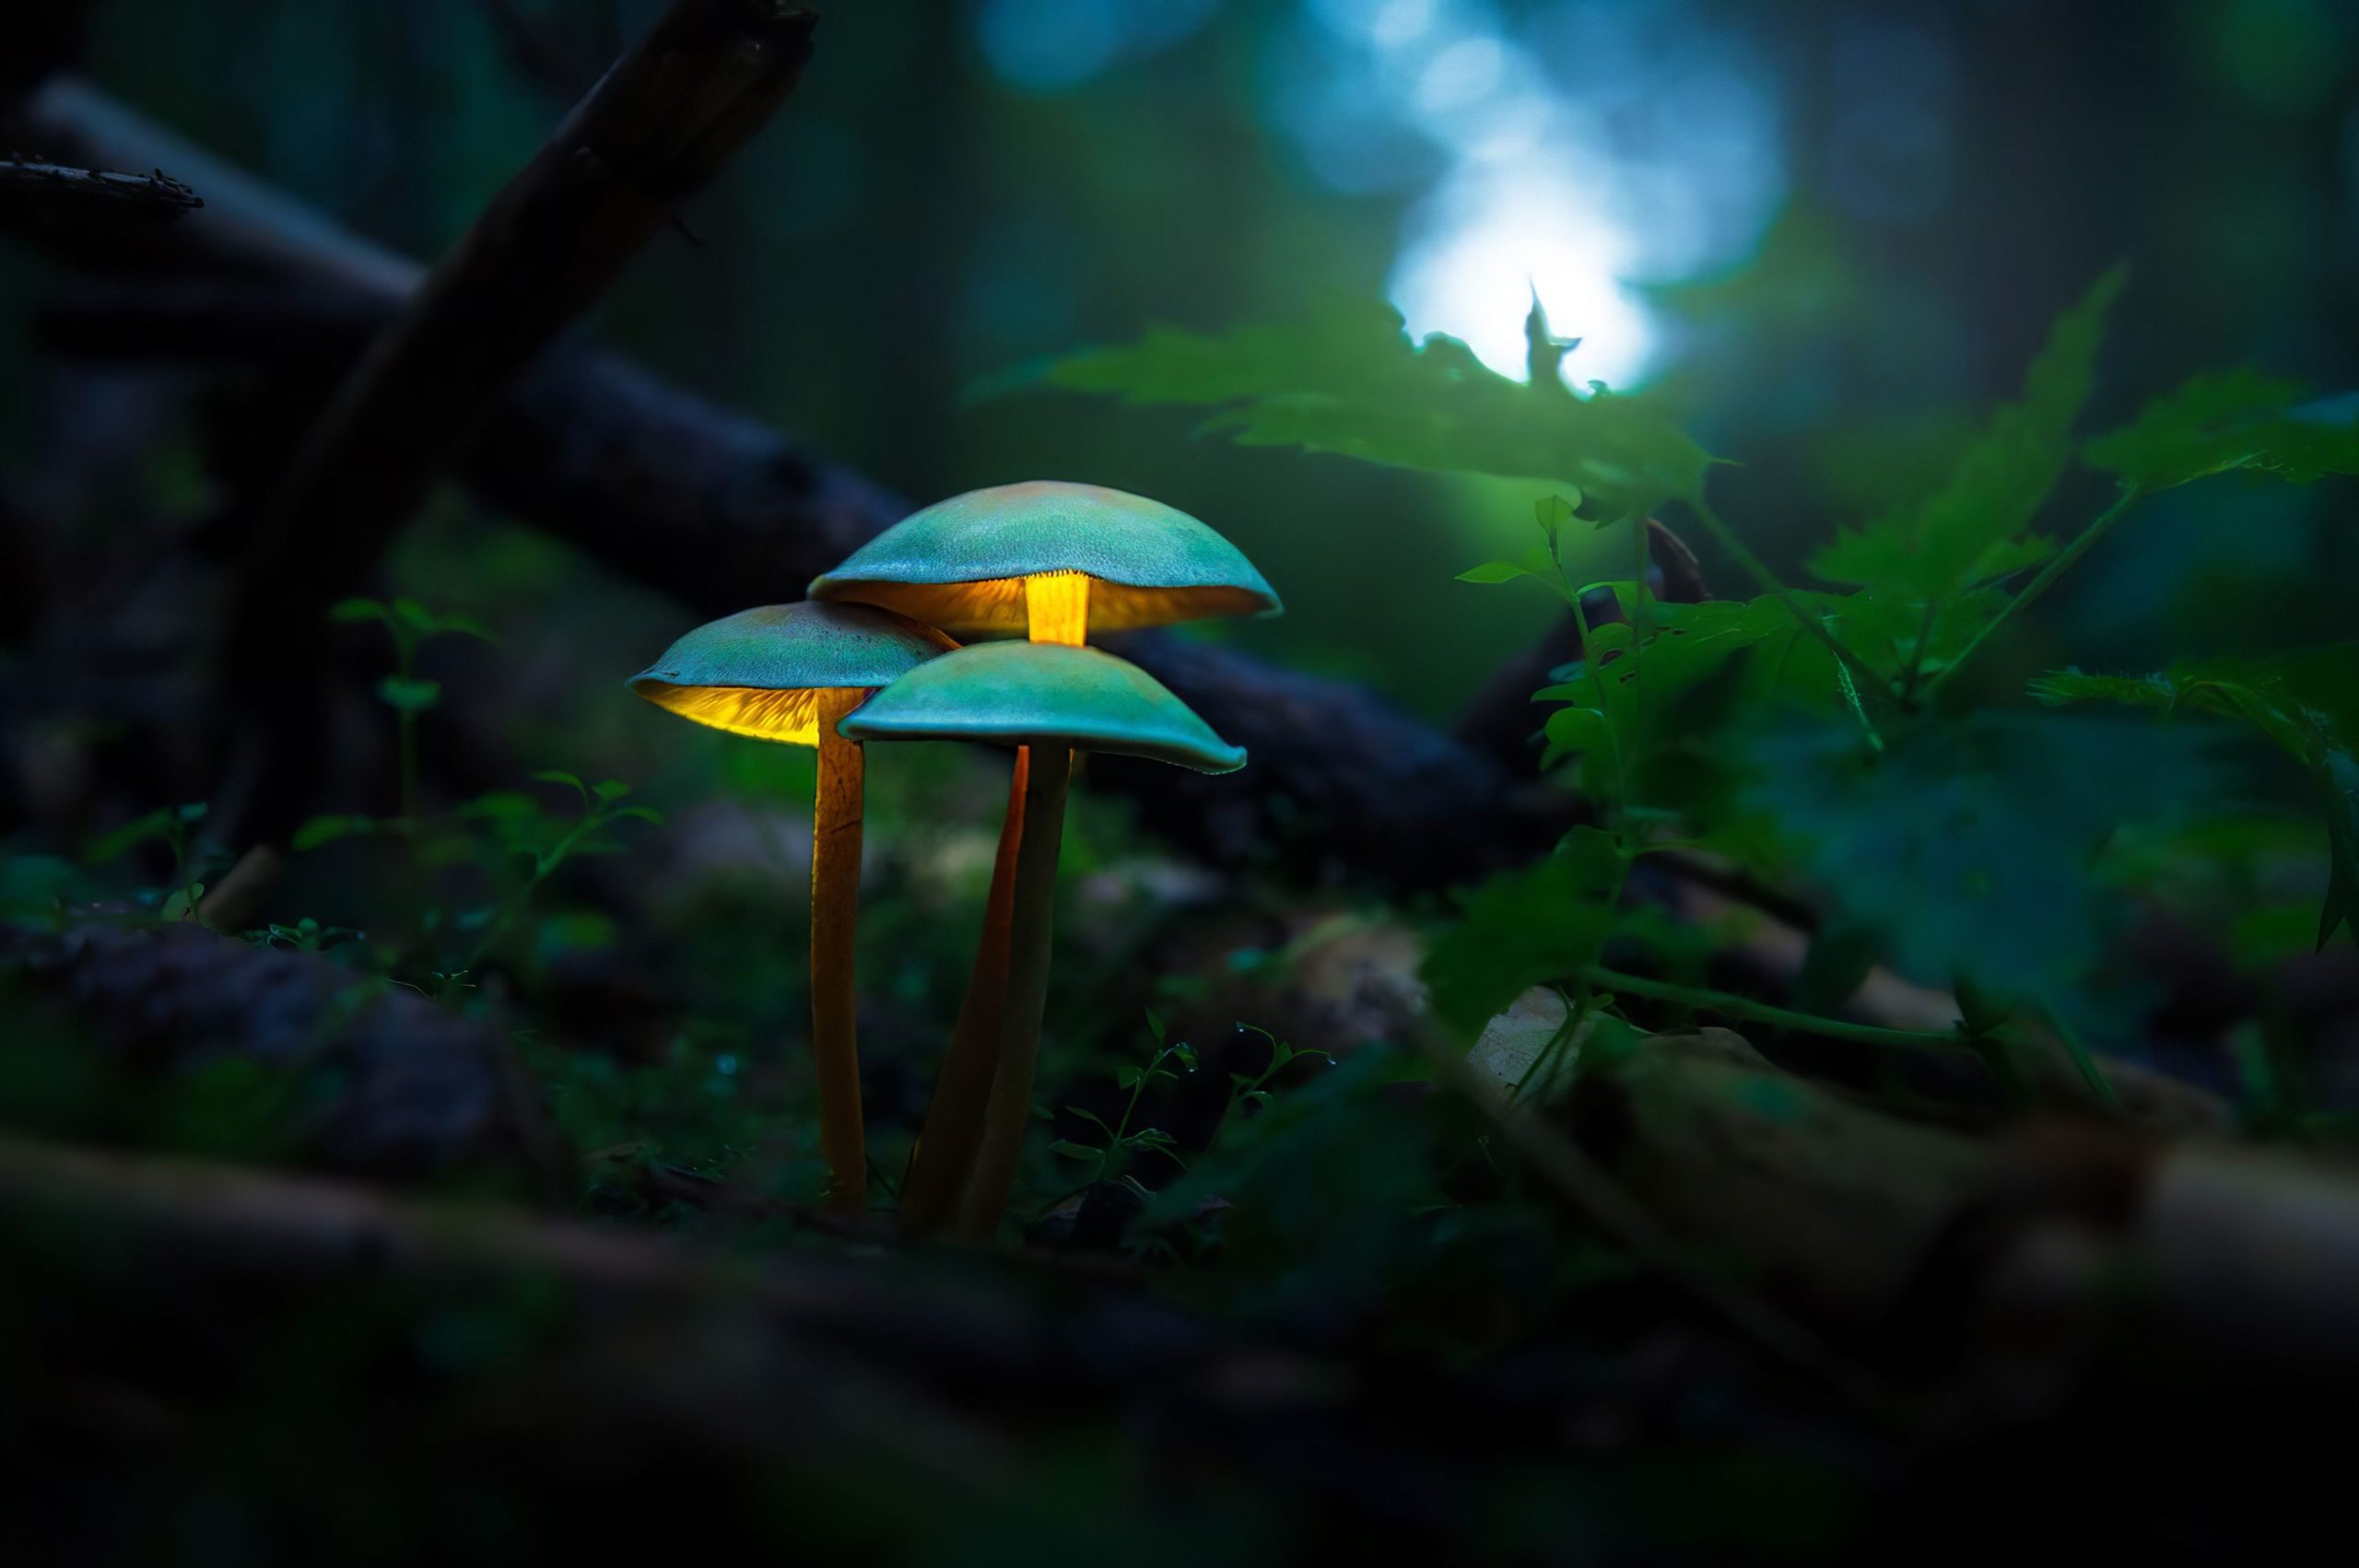 images of mushrooms